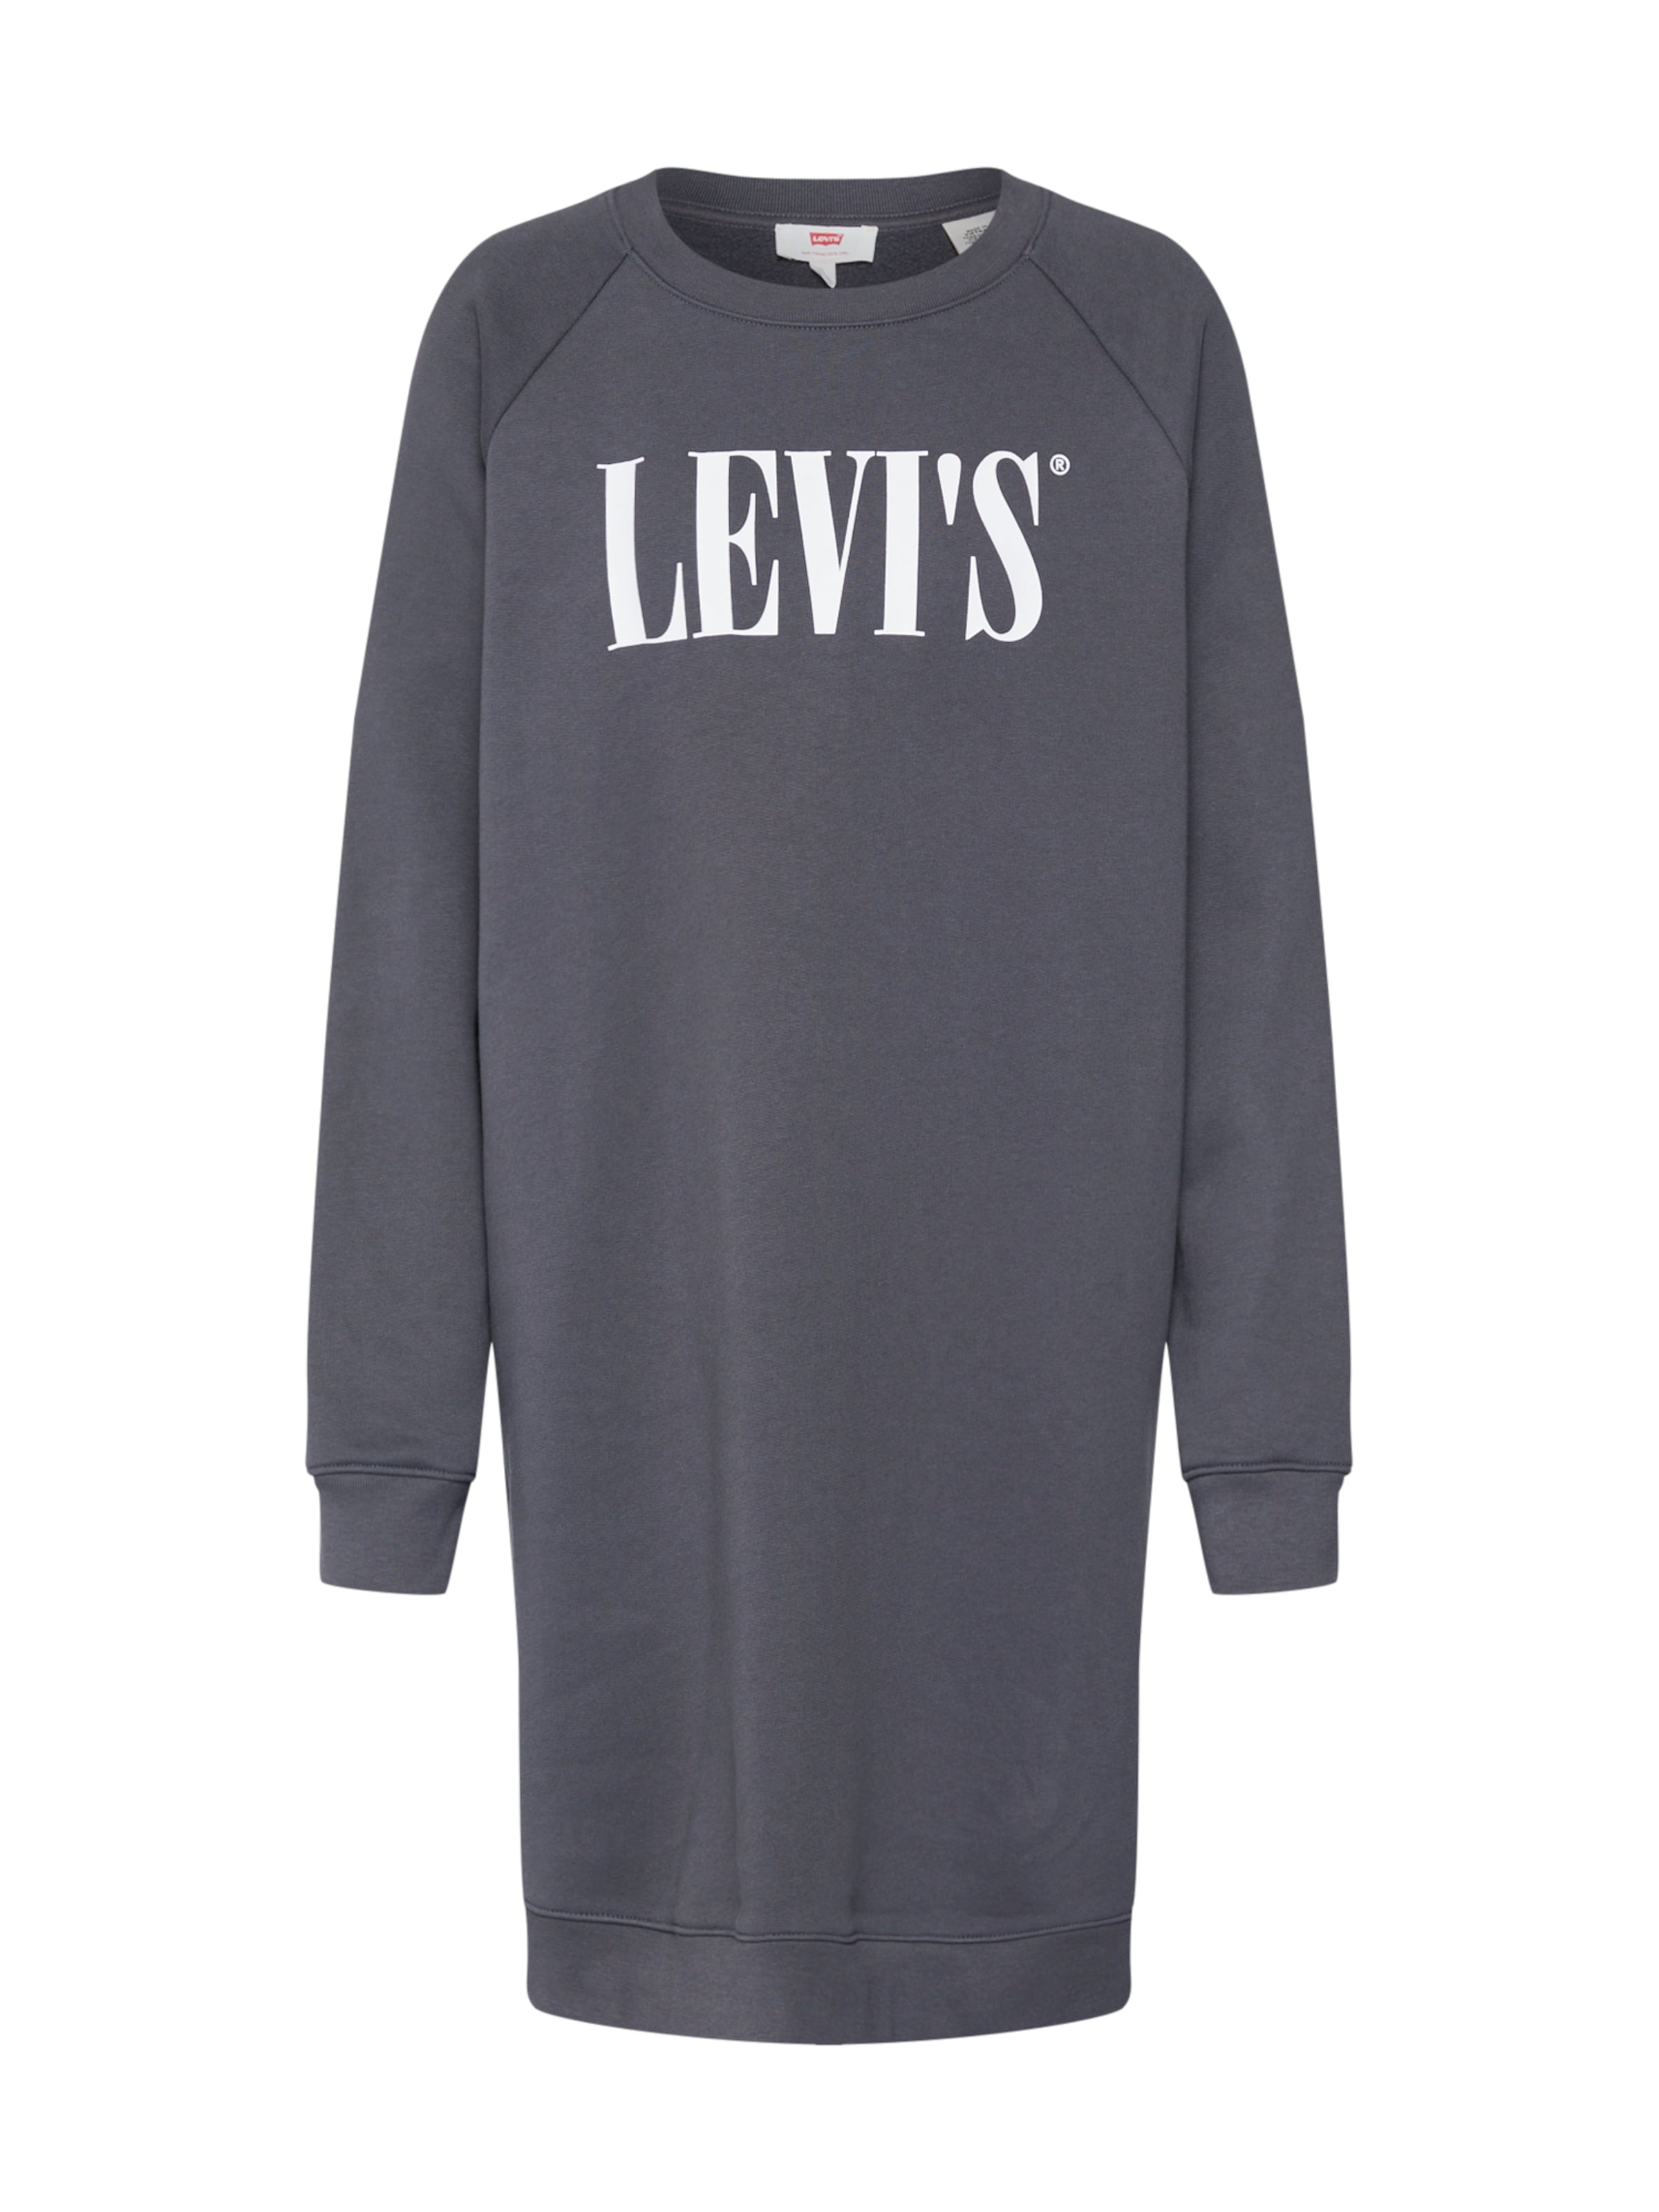 levis sweater dress